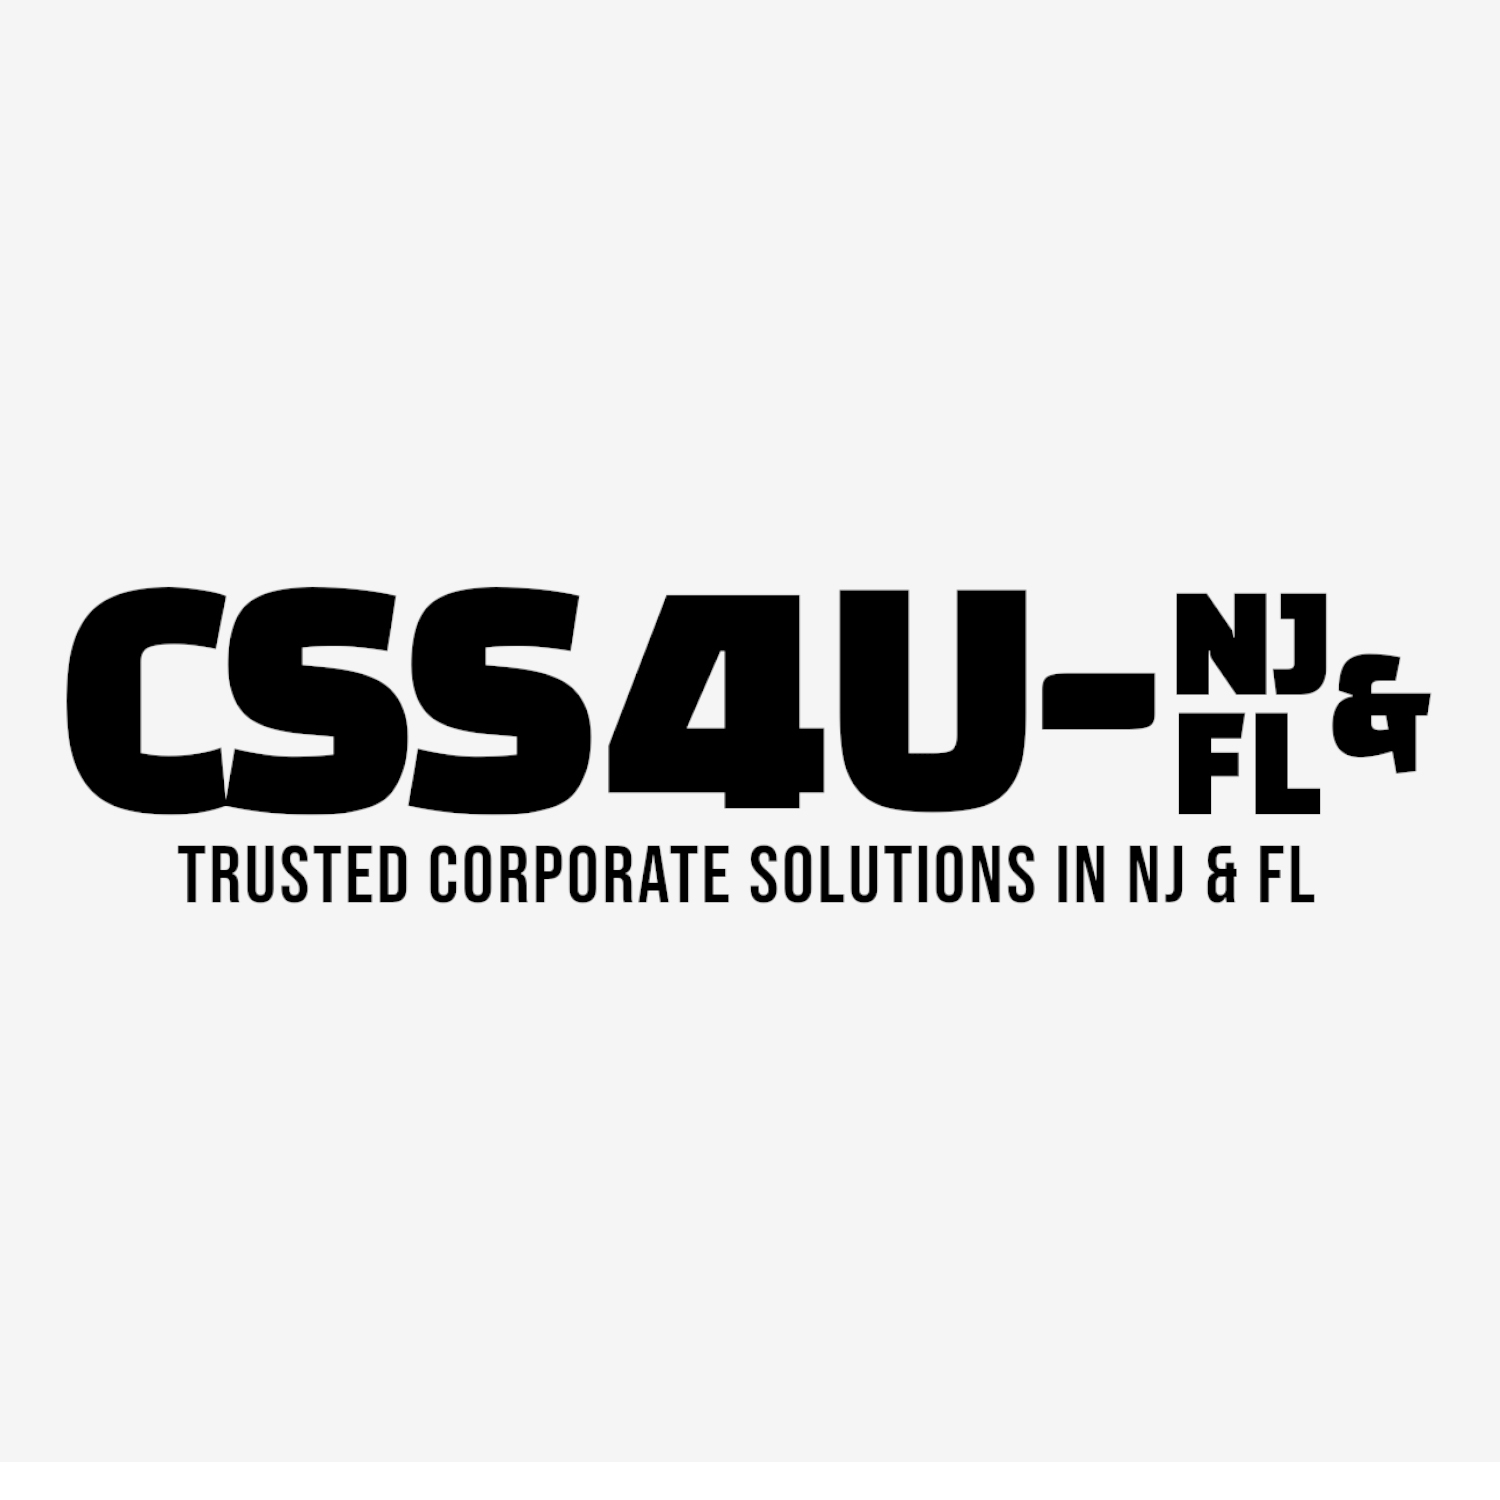 Image of Corporate Service Solution NJ & FL logo